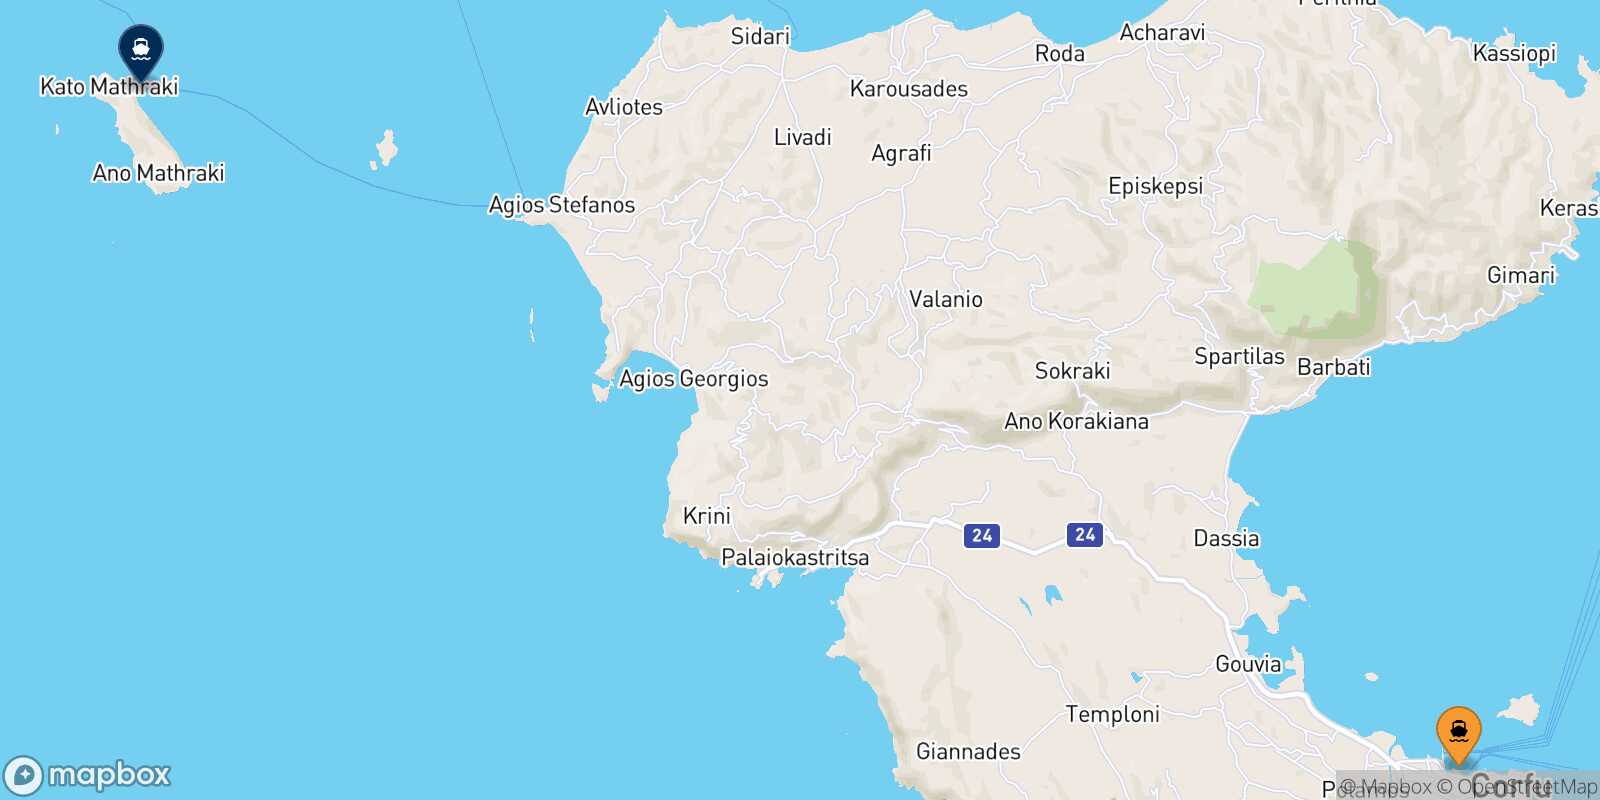 Corfu Mathraki route map